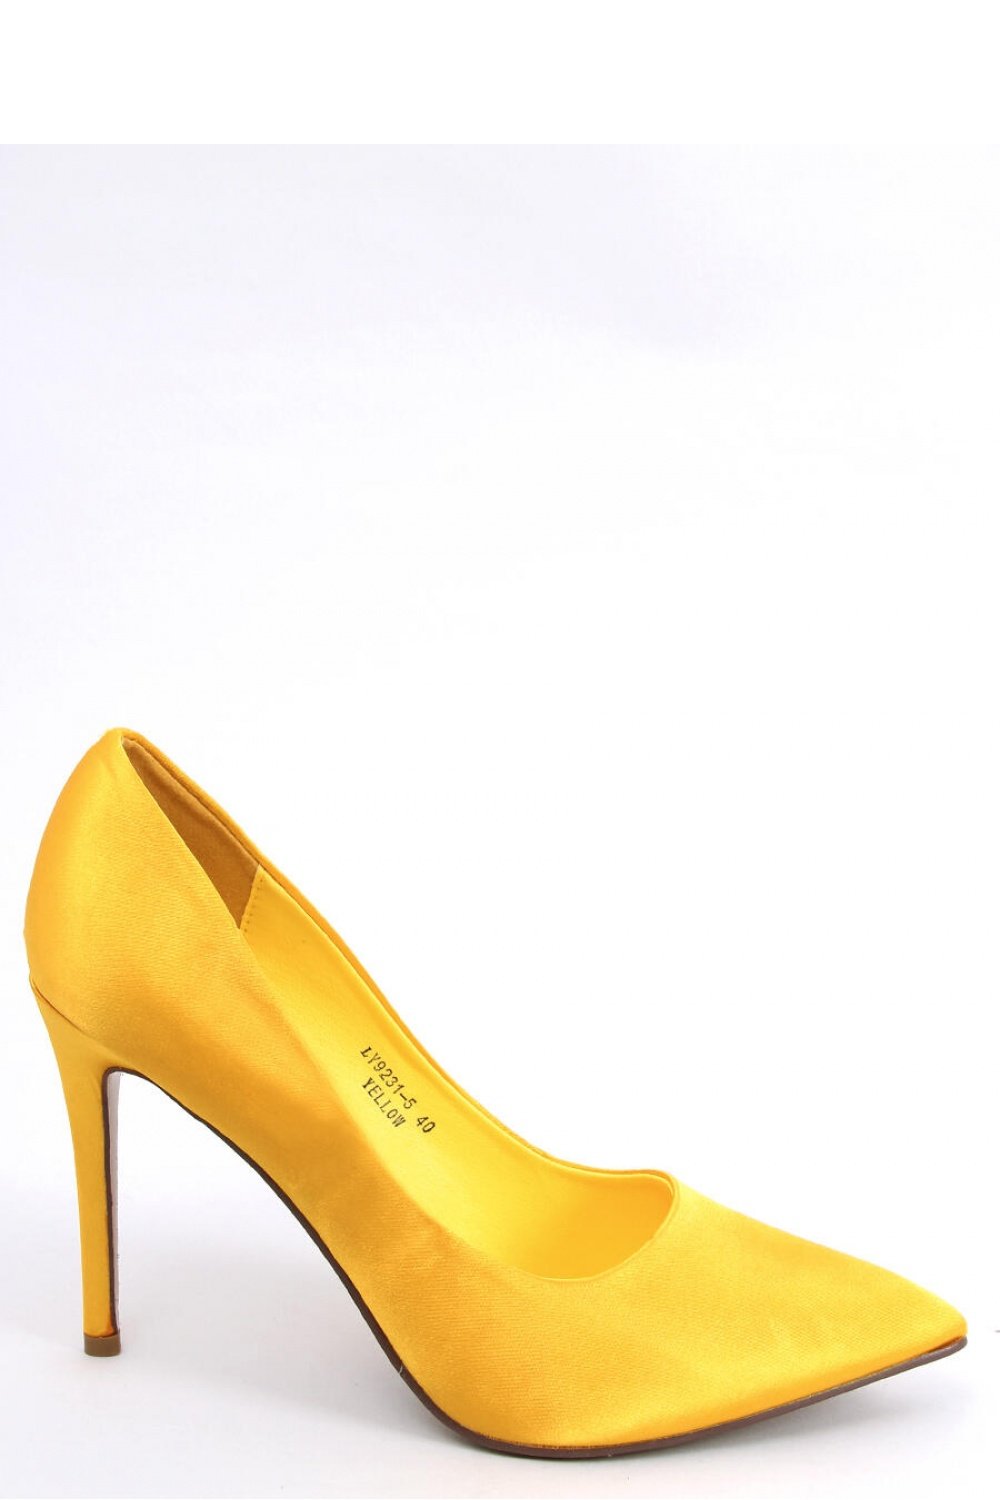 High heels model 174105 Inello Posh Styles Apparel